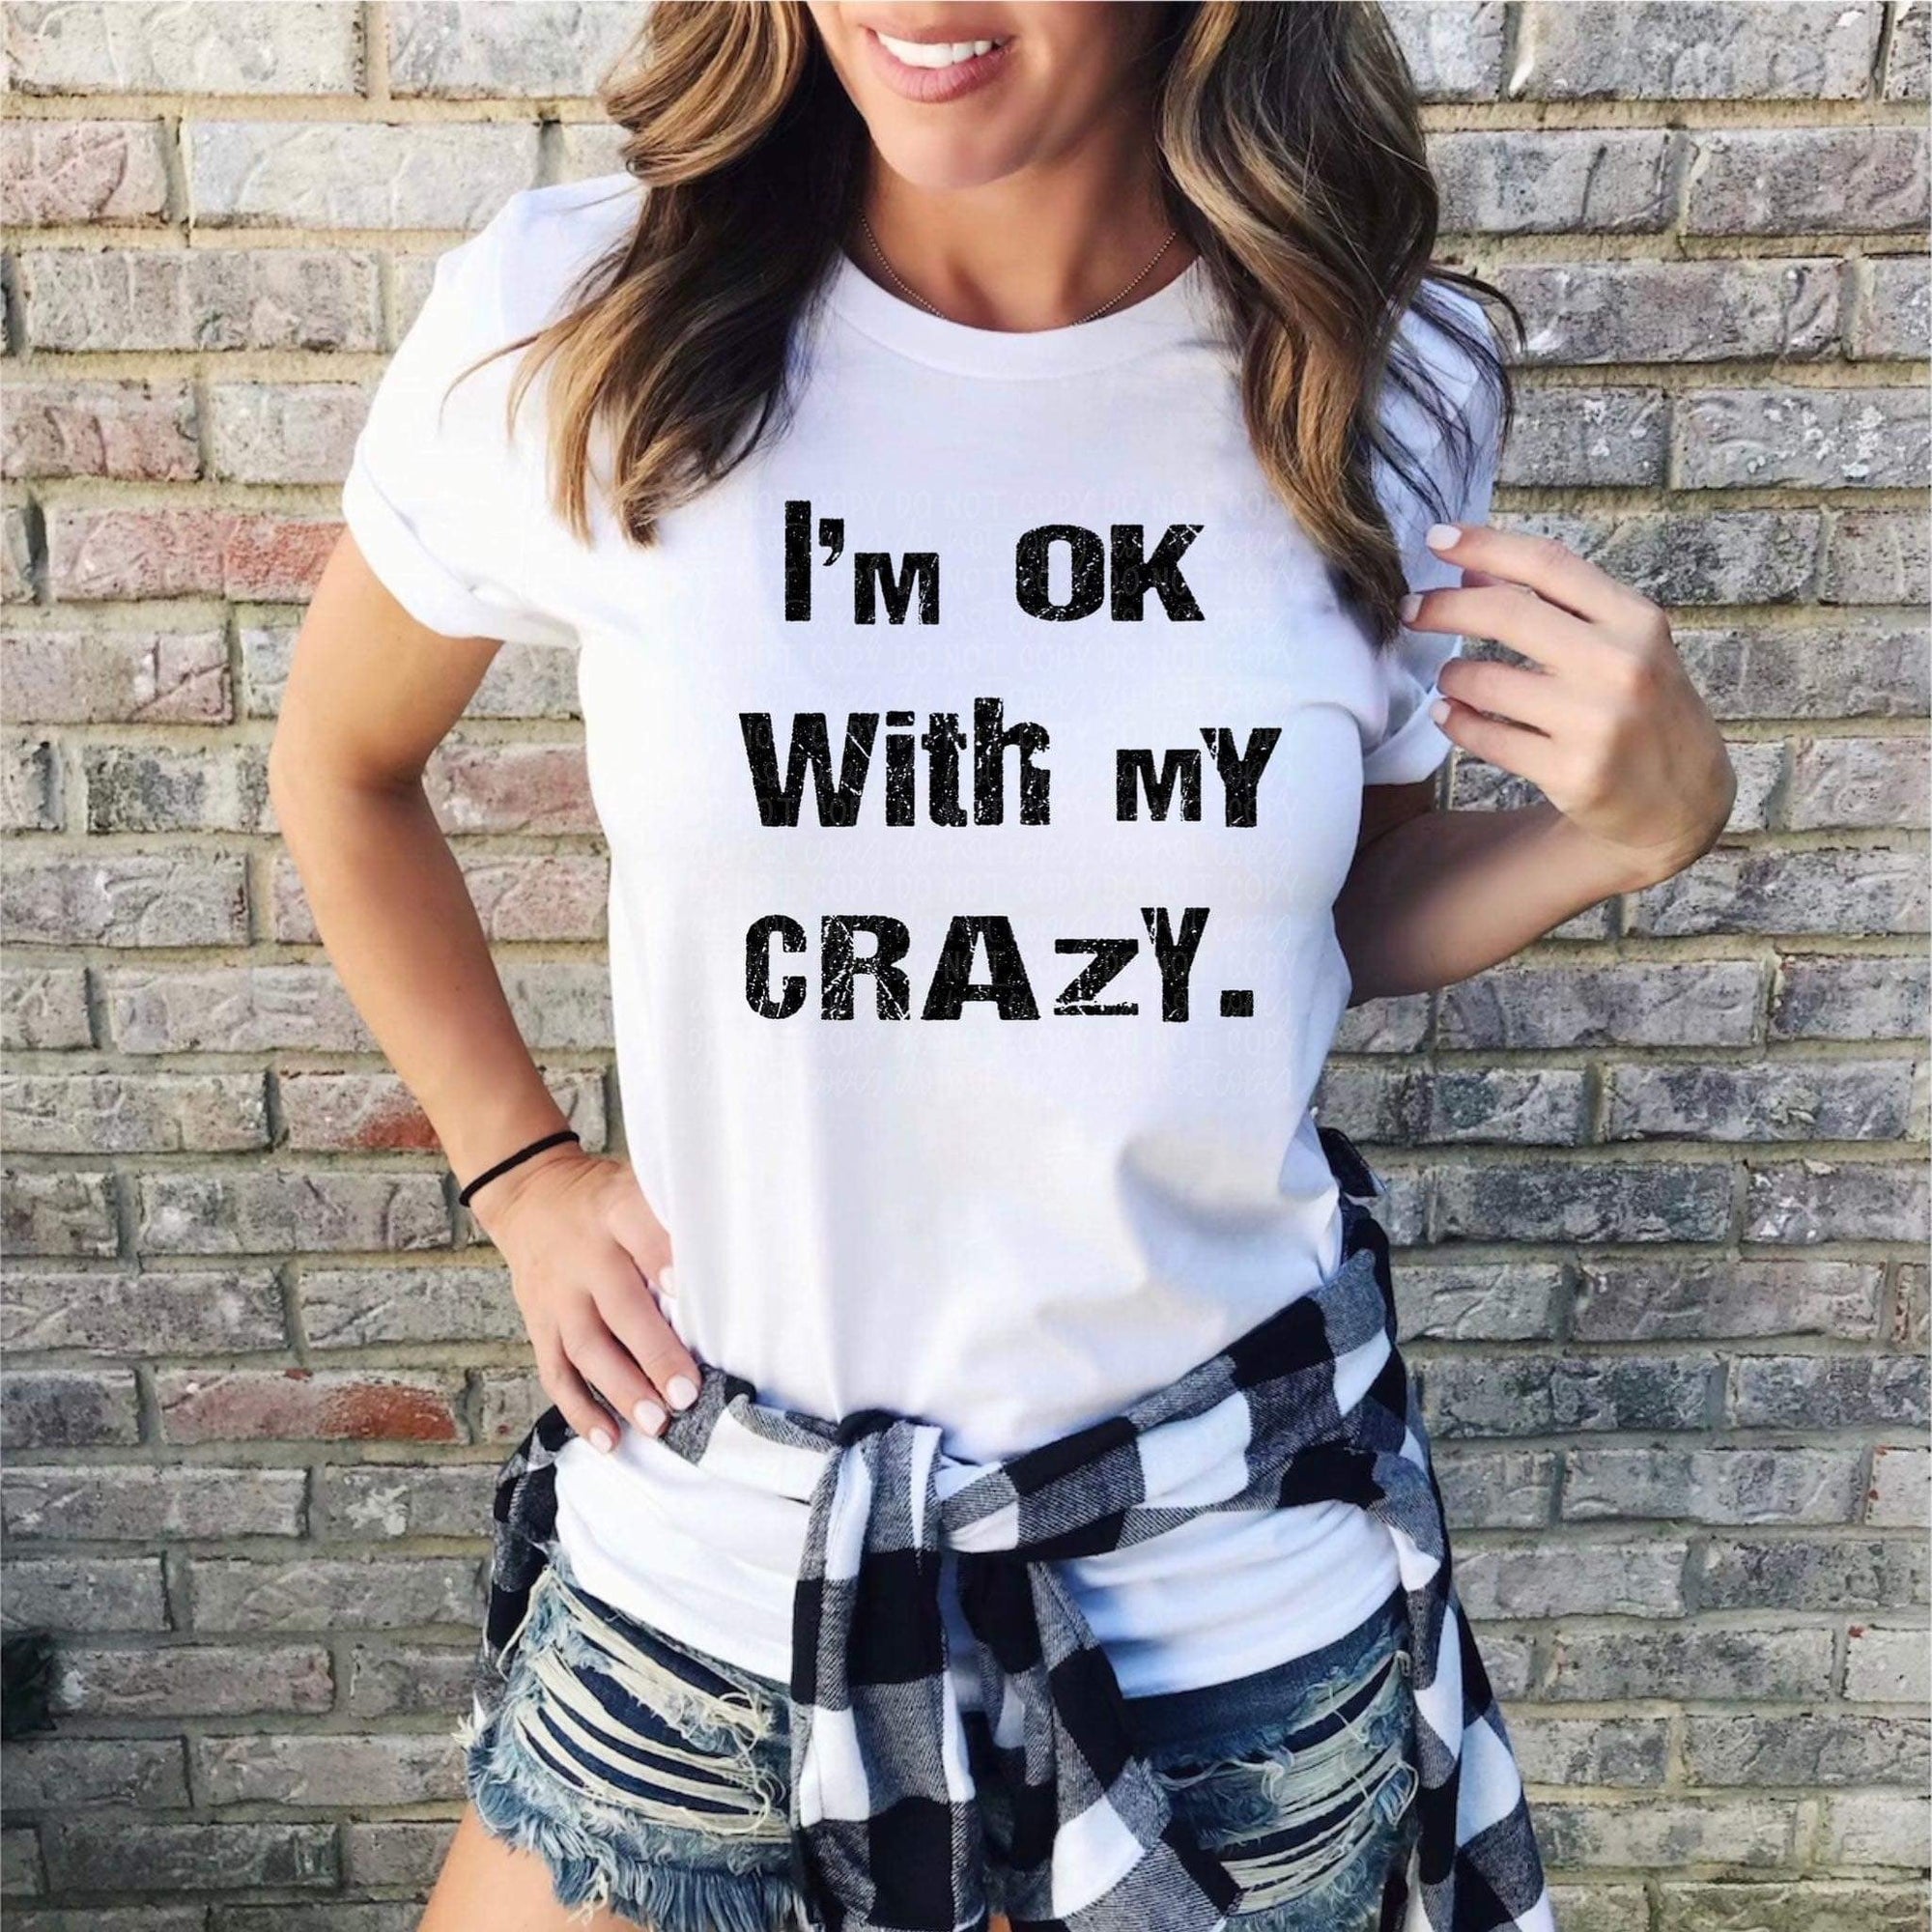 I’m Okay With My Crazy-White